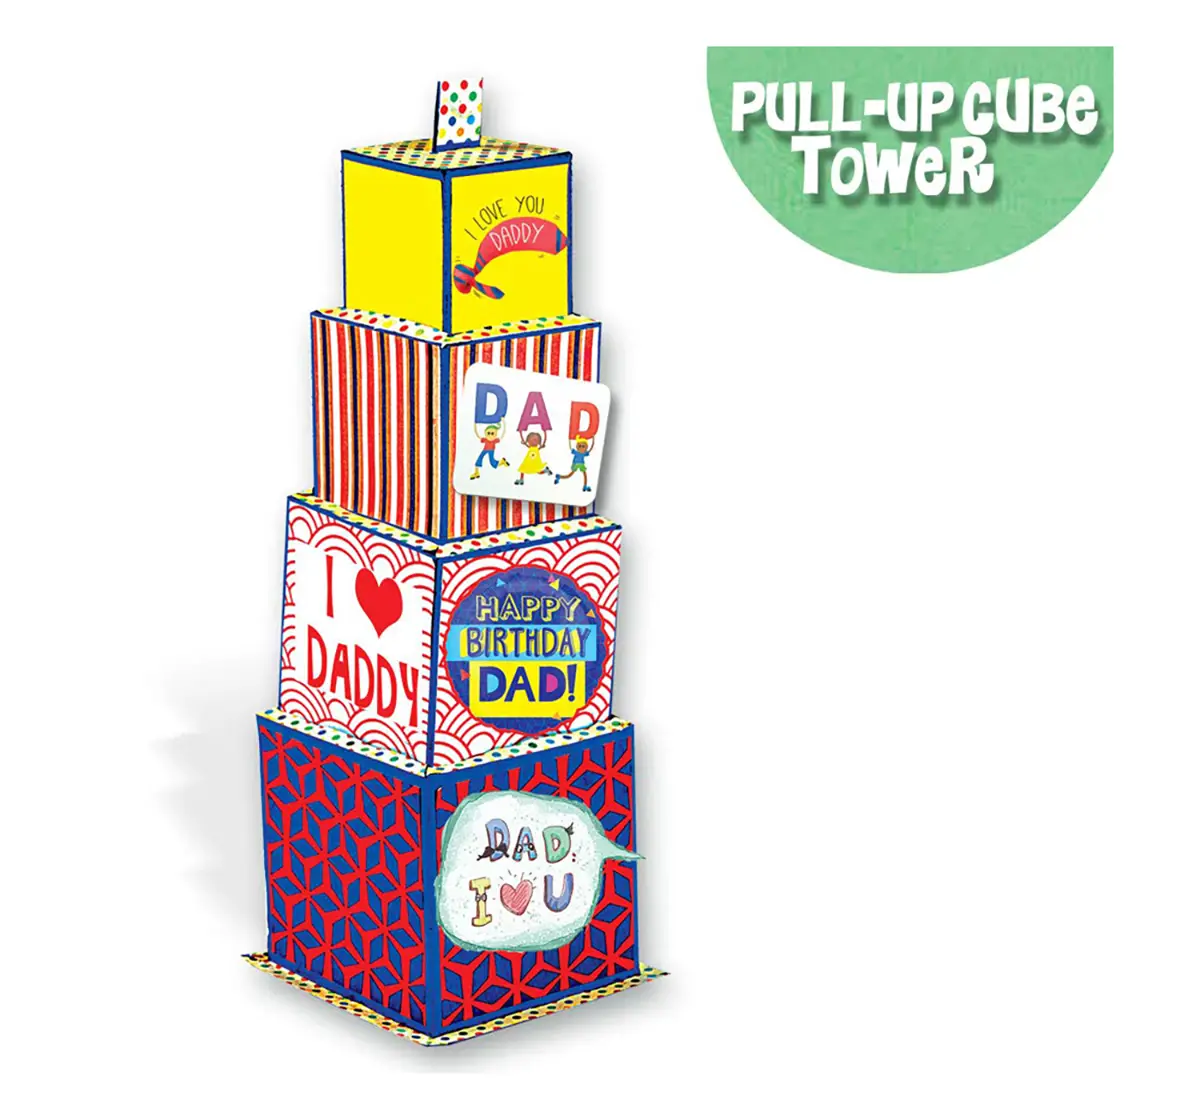 Toykrafft Cubic-Fun Displays DIY Art & Craft Kits for Kids age 10Y+ 